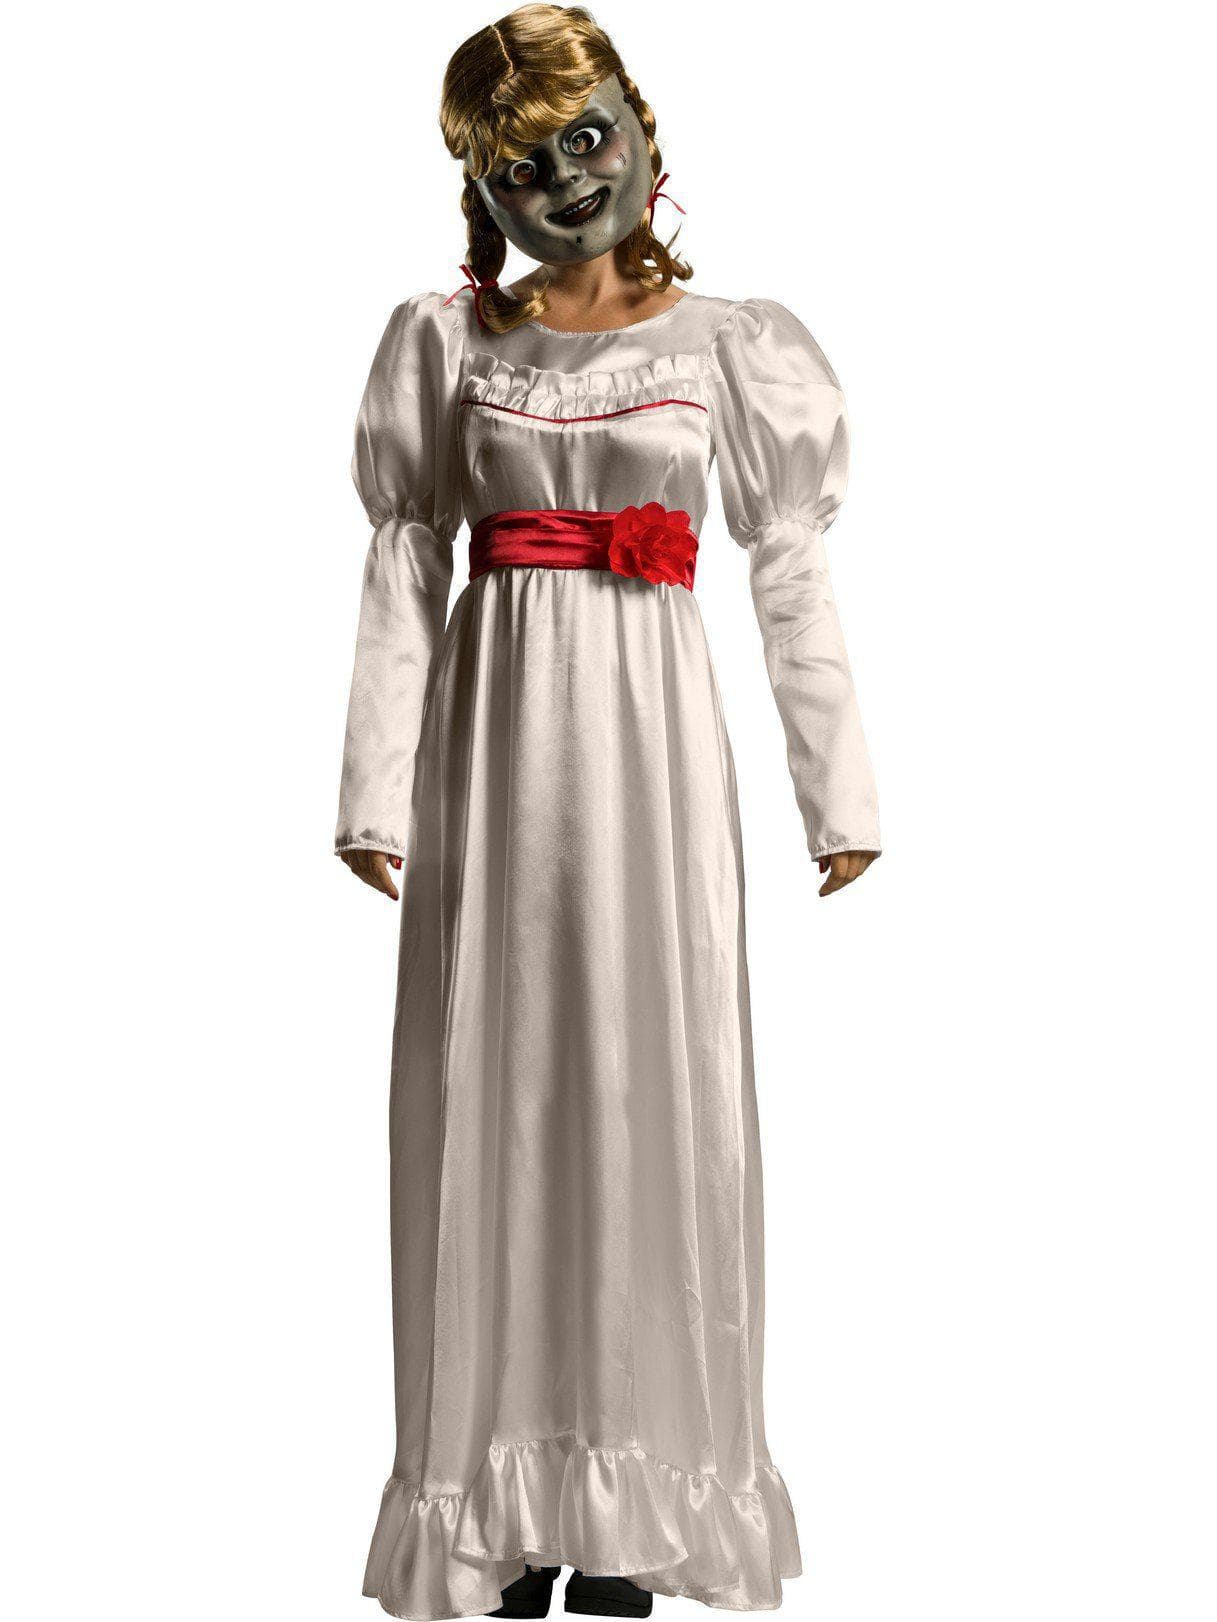 Women's Annabelle Costume - Deluxe - costumes.com